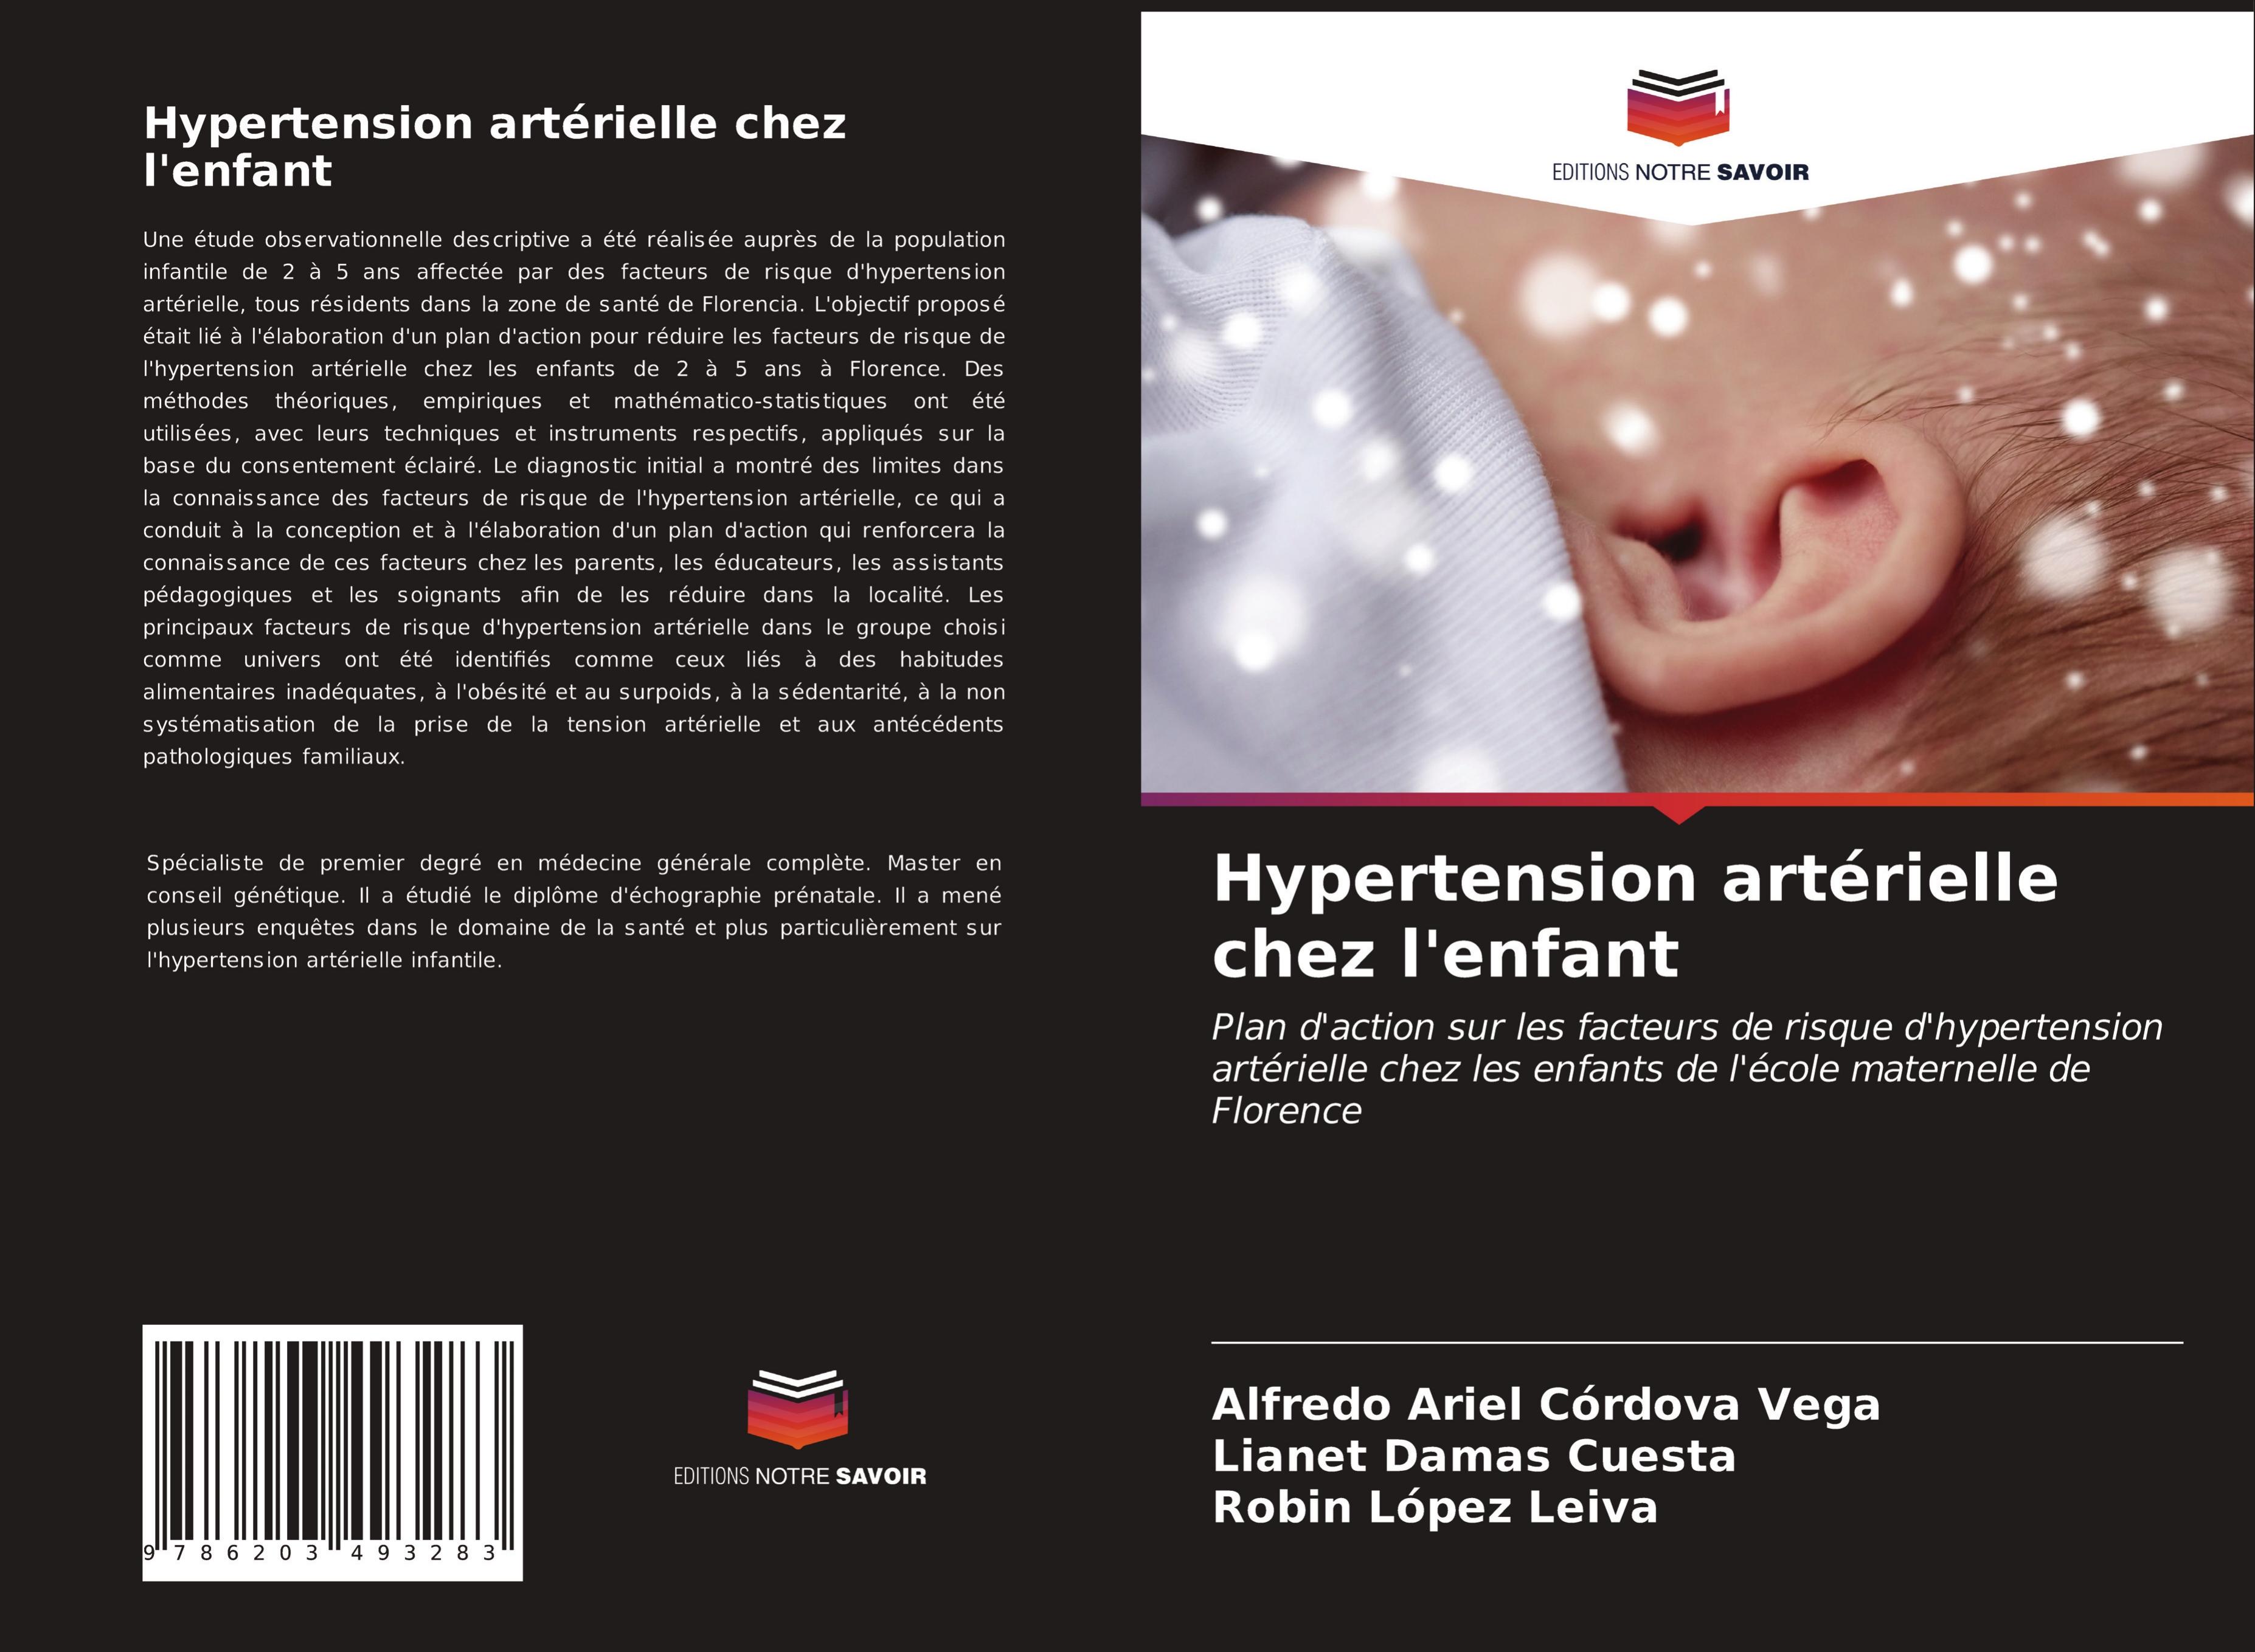 Hypertension artérielle chez l enfant - Córdova Vega, Alfredo Ariel Damas Cuesta, Lianet López Leiva, Robin